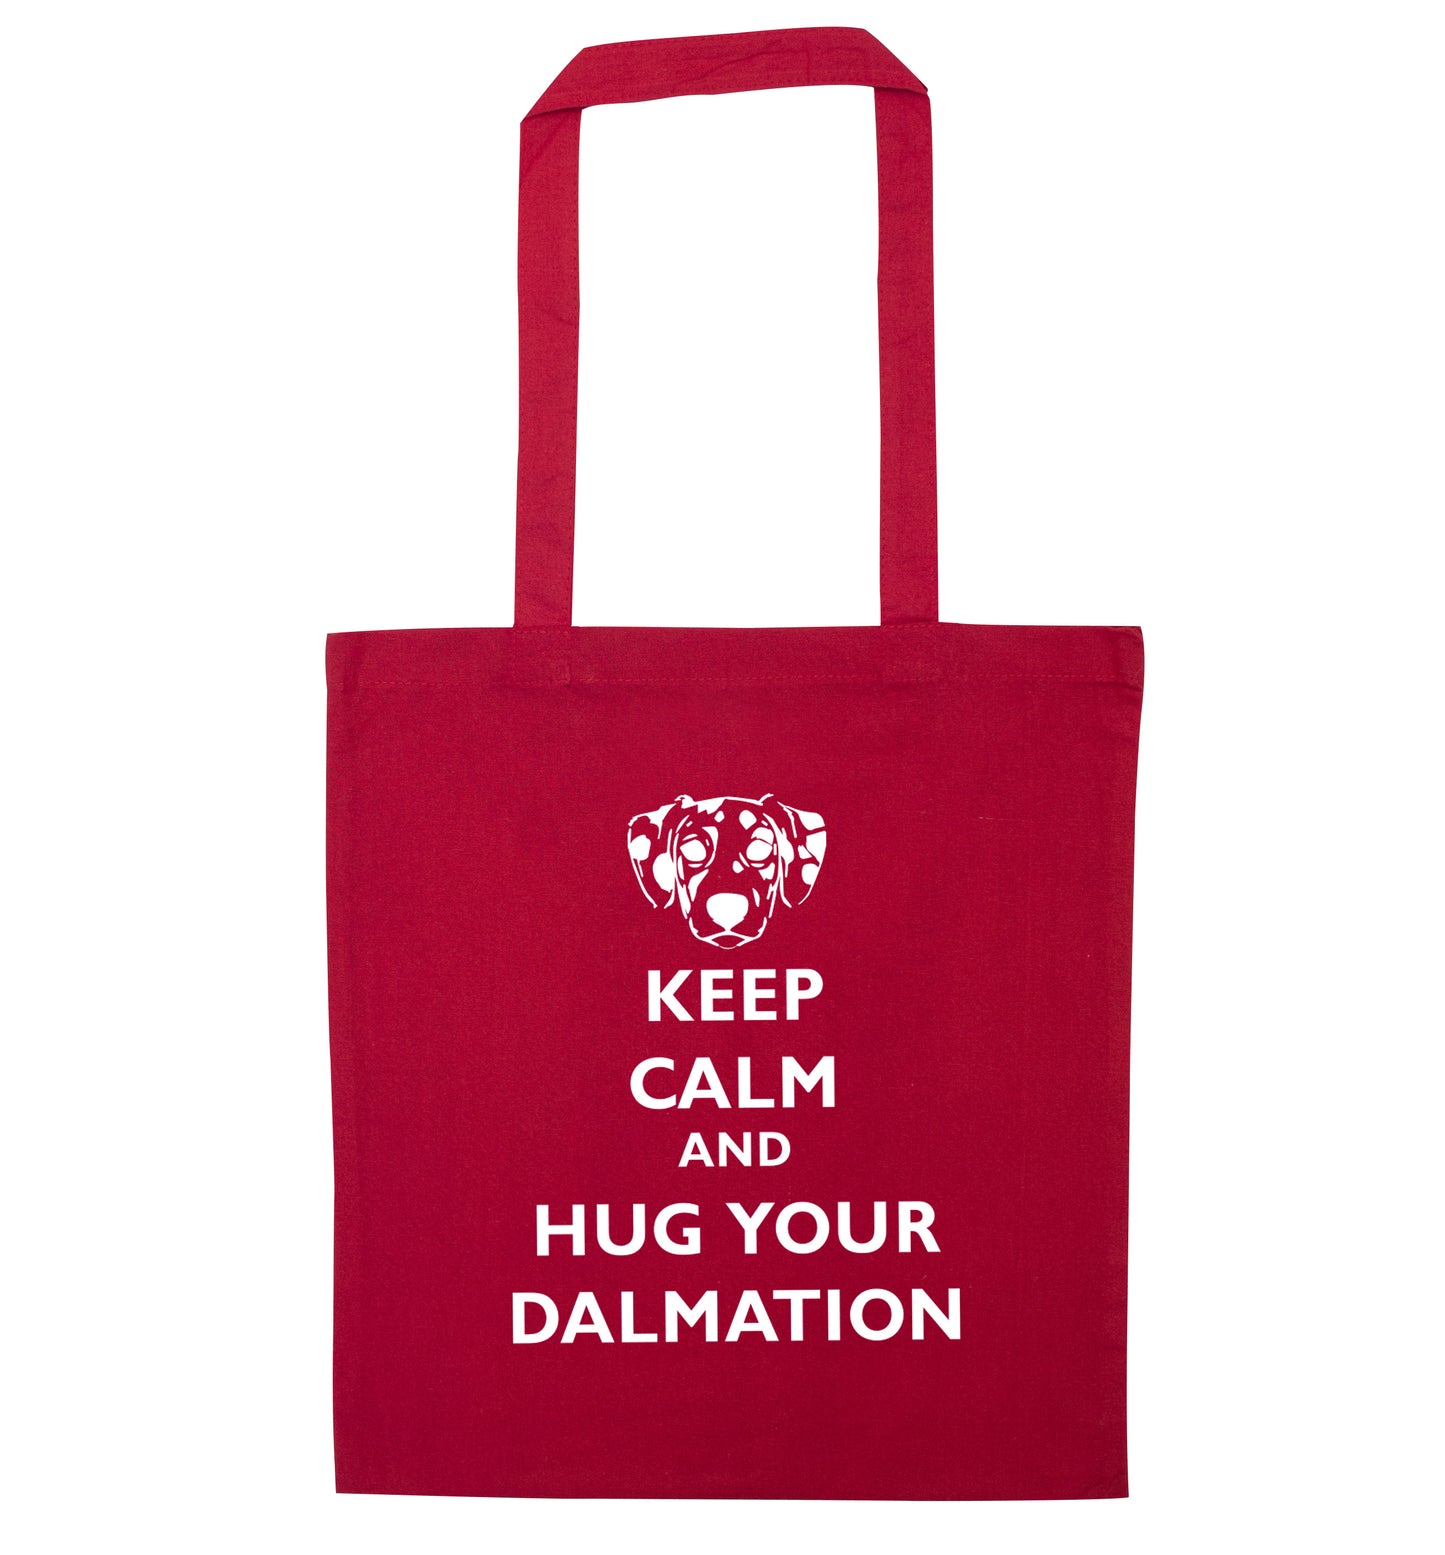 Keep calm and hug your dalmation red tote bag